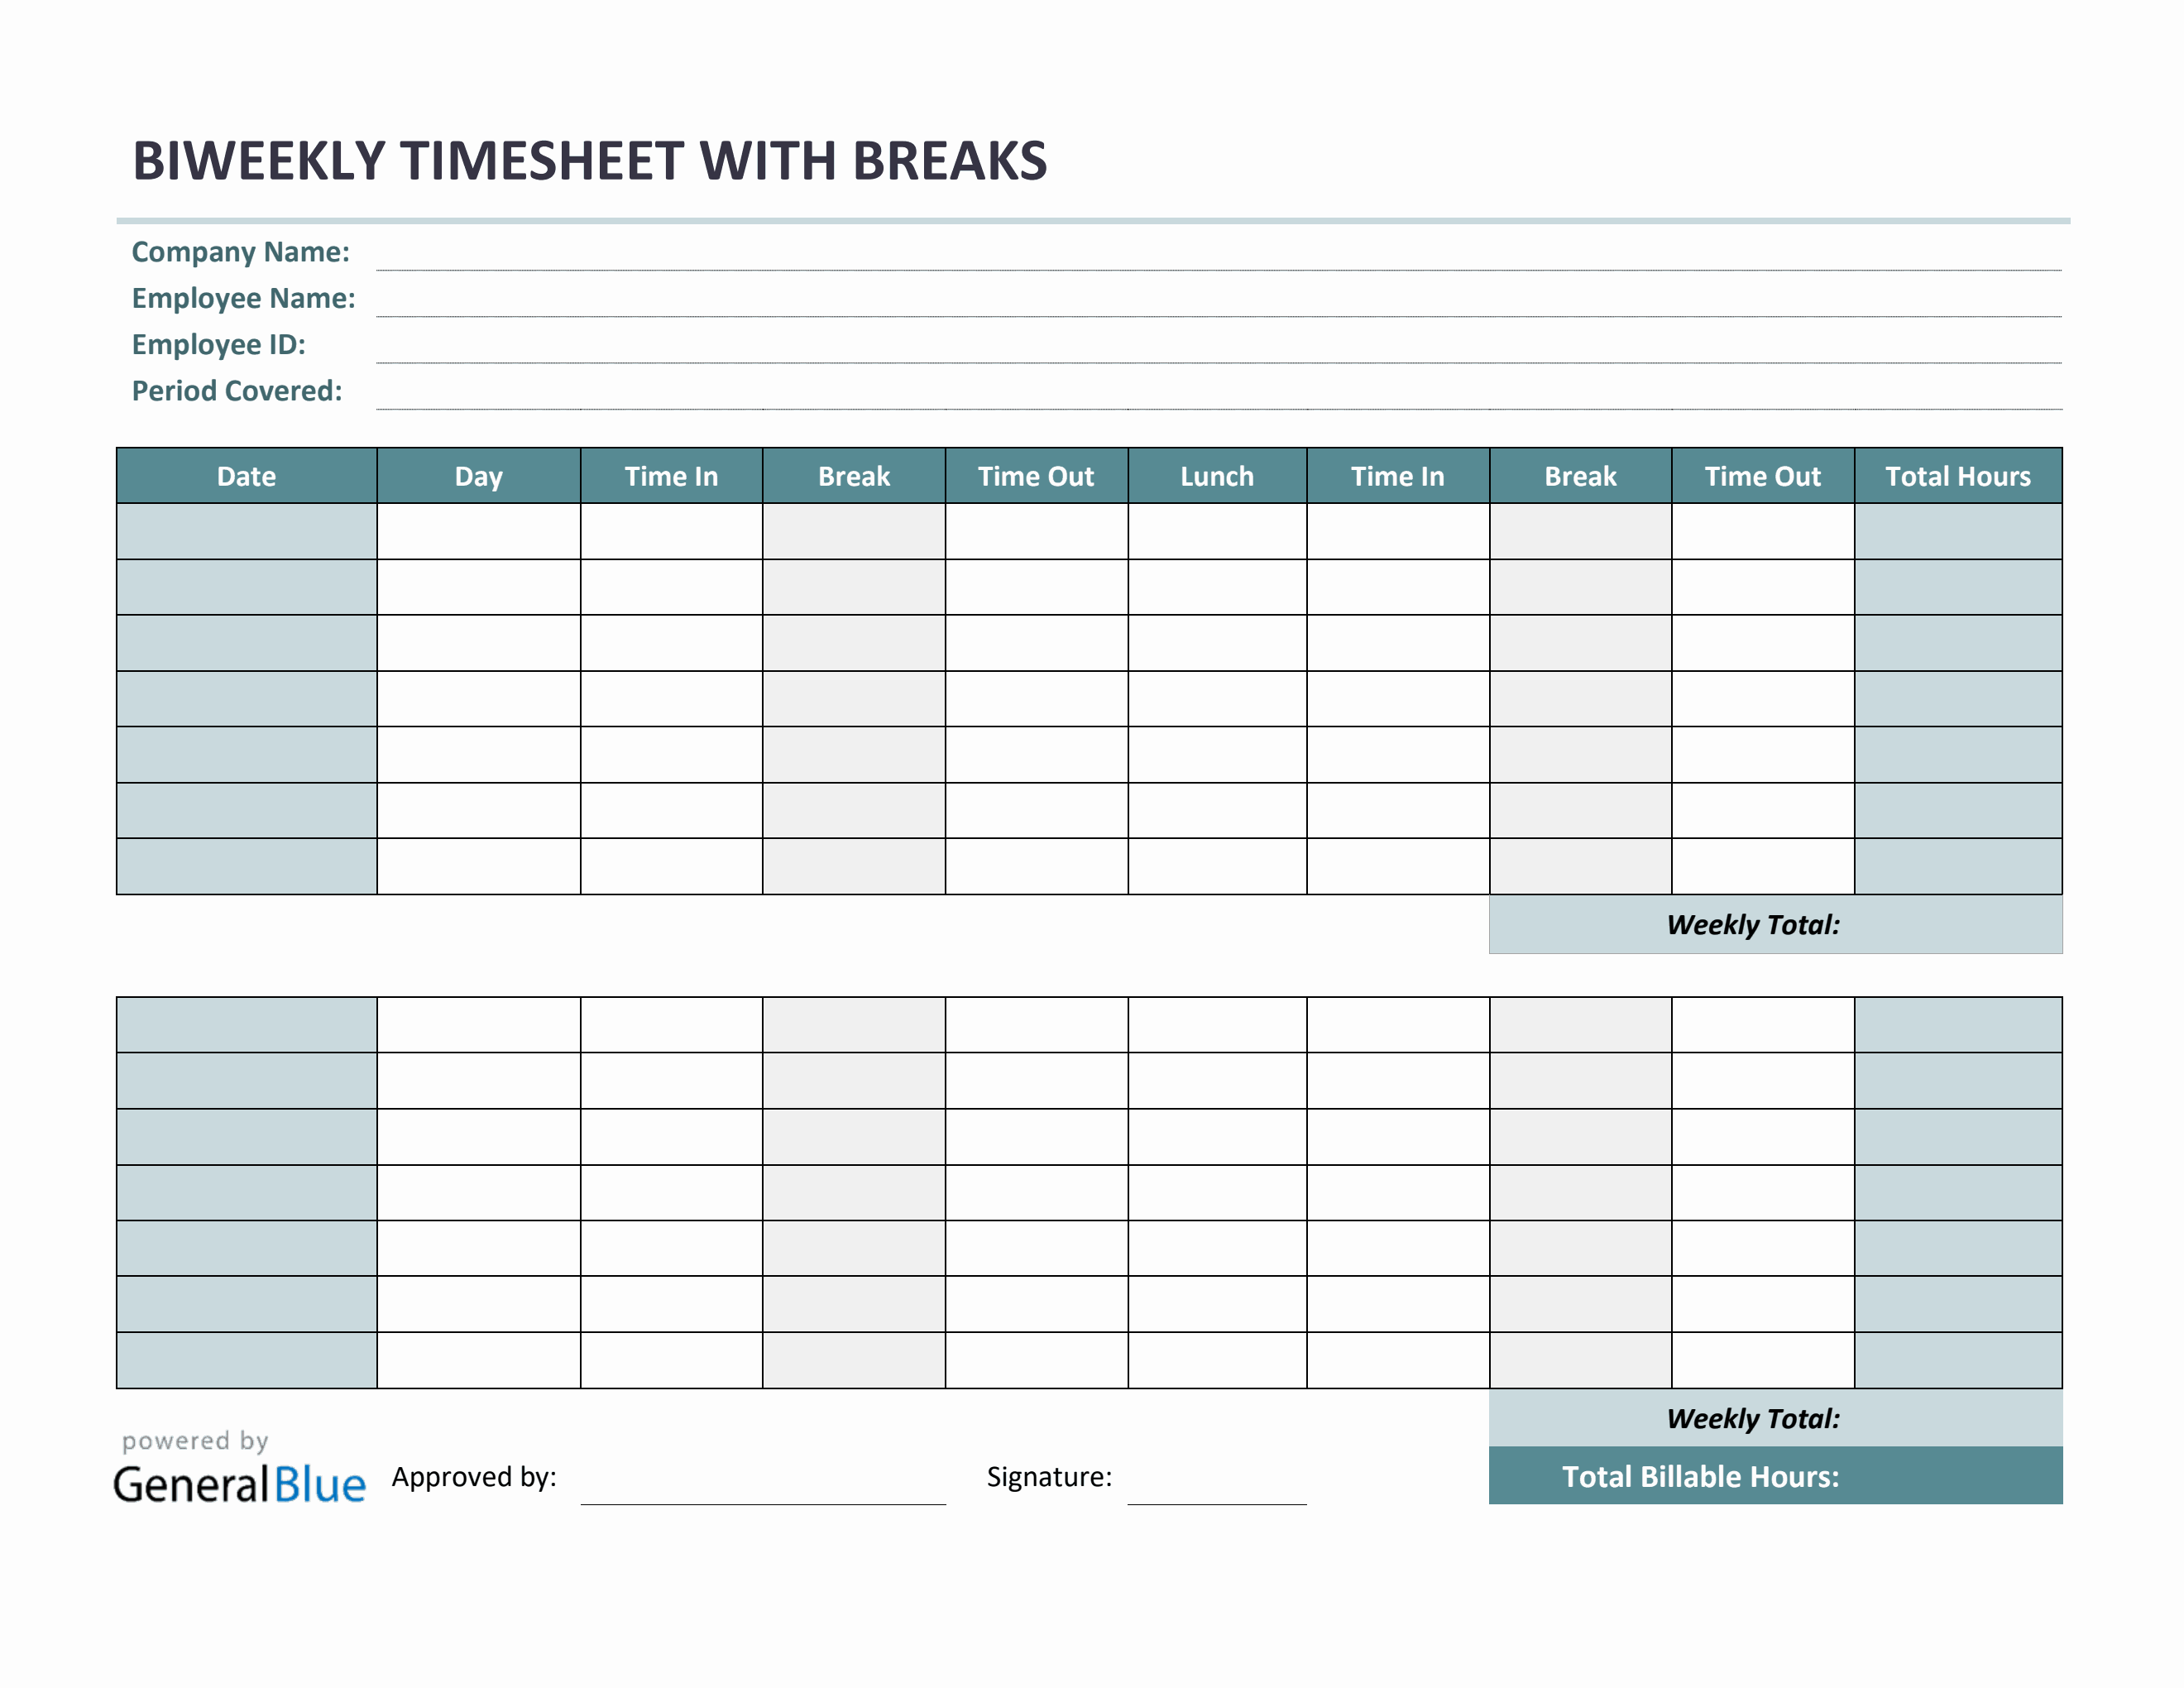 biweekly-timesheet-with-multiple-breaks-in-pdf-biweekly-timesheet